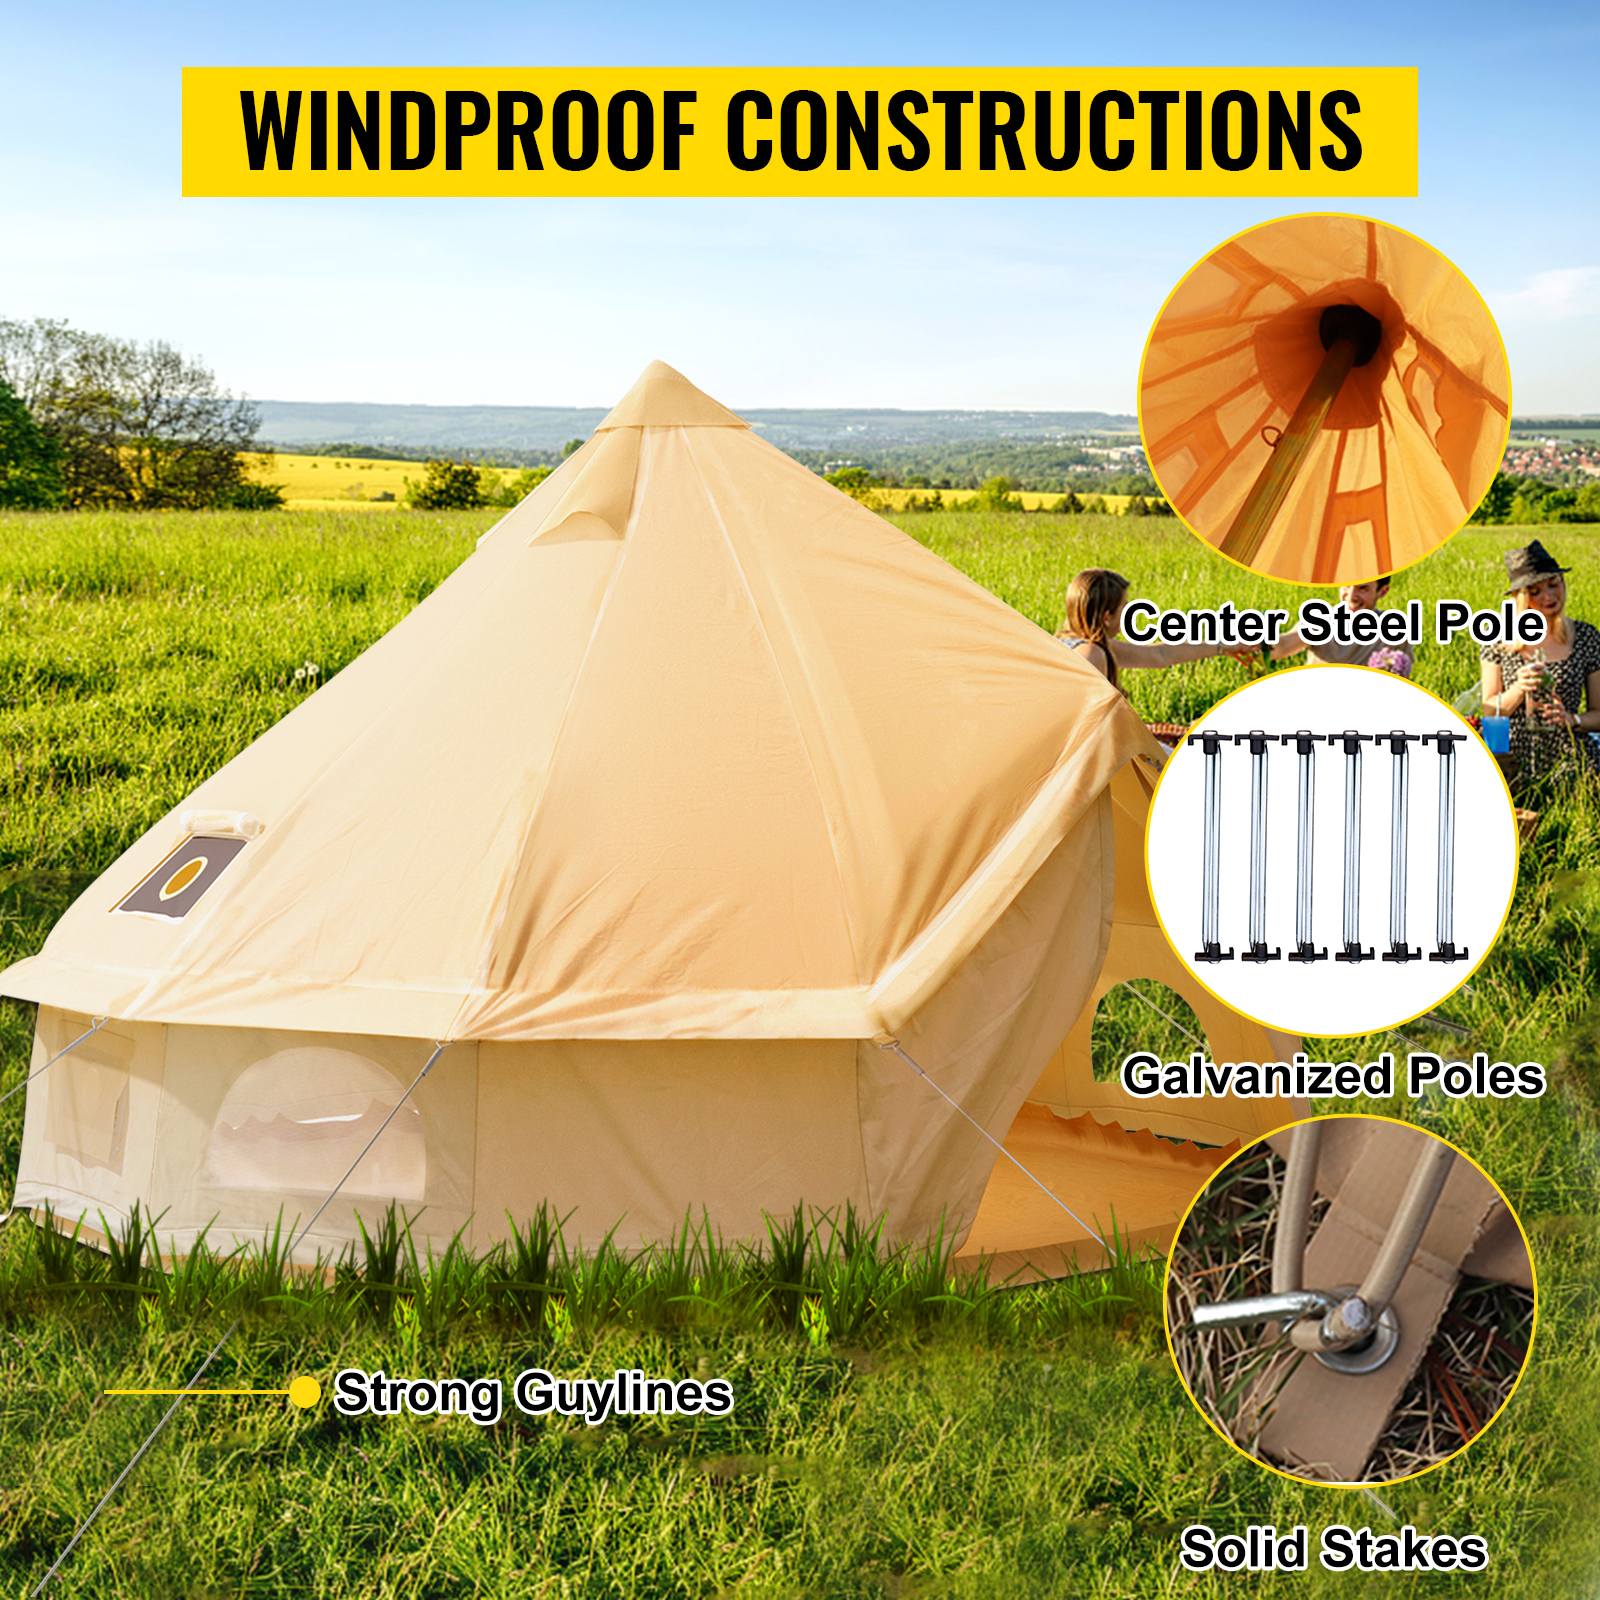 VEVOR Canvas Bell Tent, Waterproof & Breathable 100% Cotton Retro